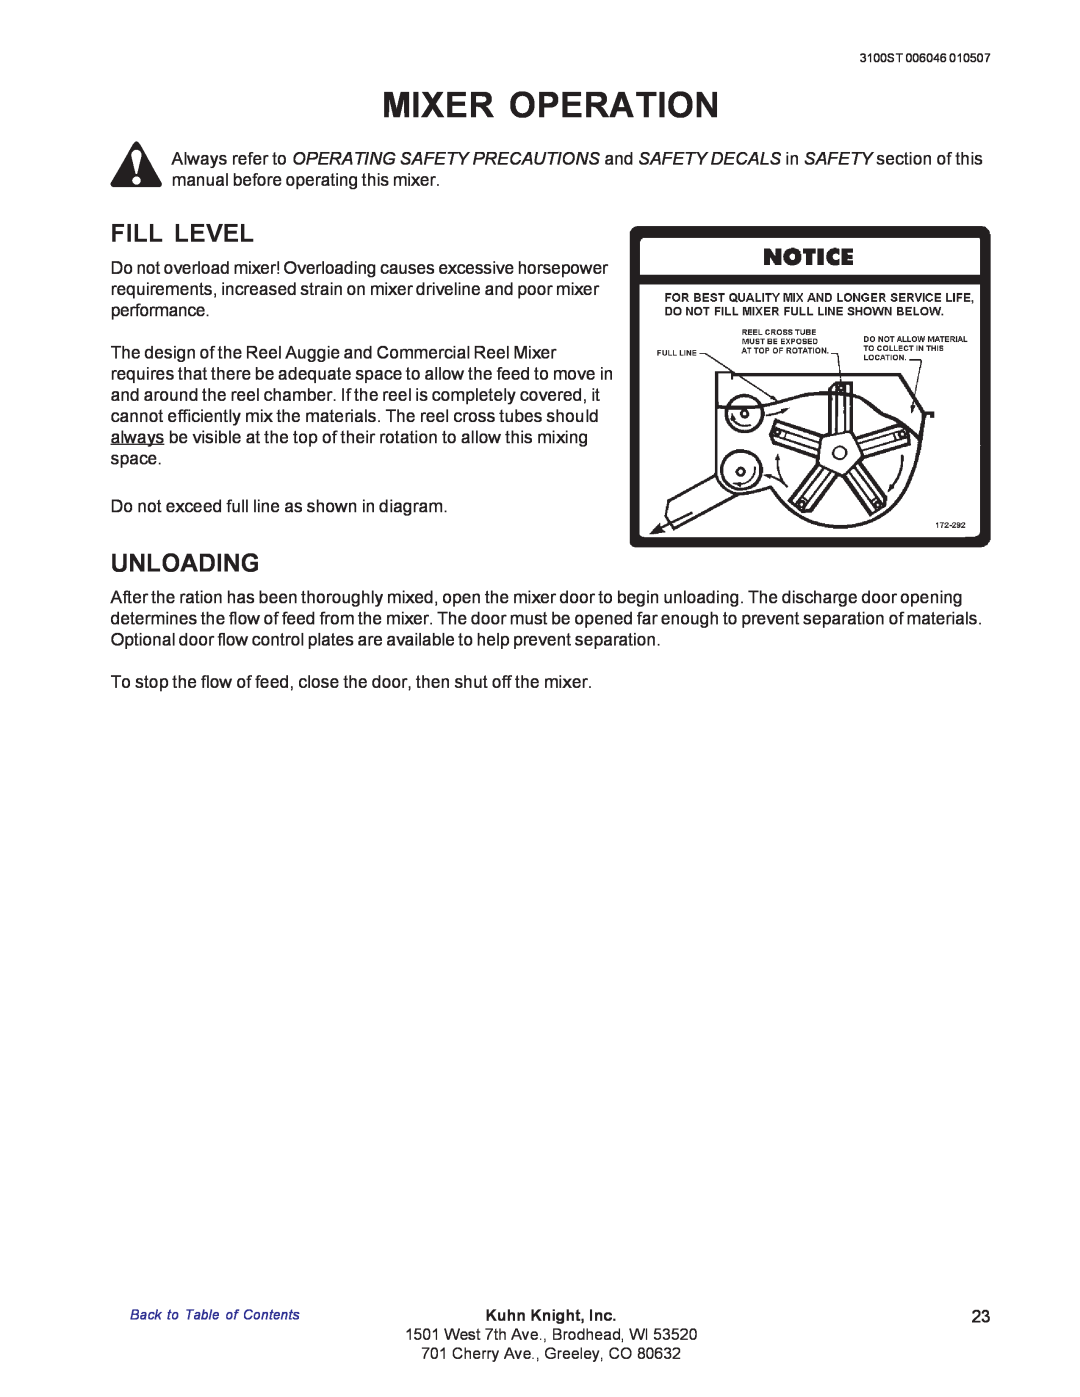 Kuhn Rikon 3100 instruction manual Fill Level, Unloading, Mixer Operation 